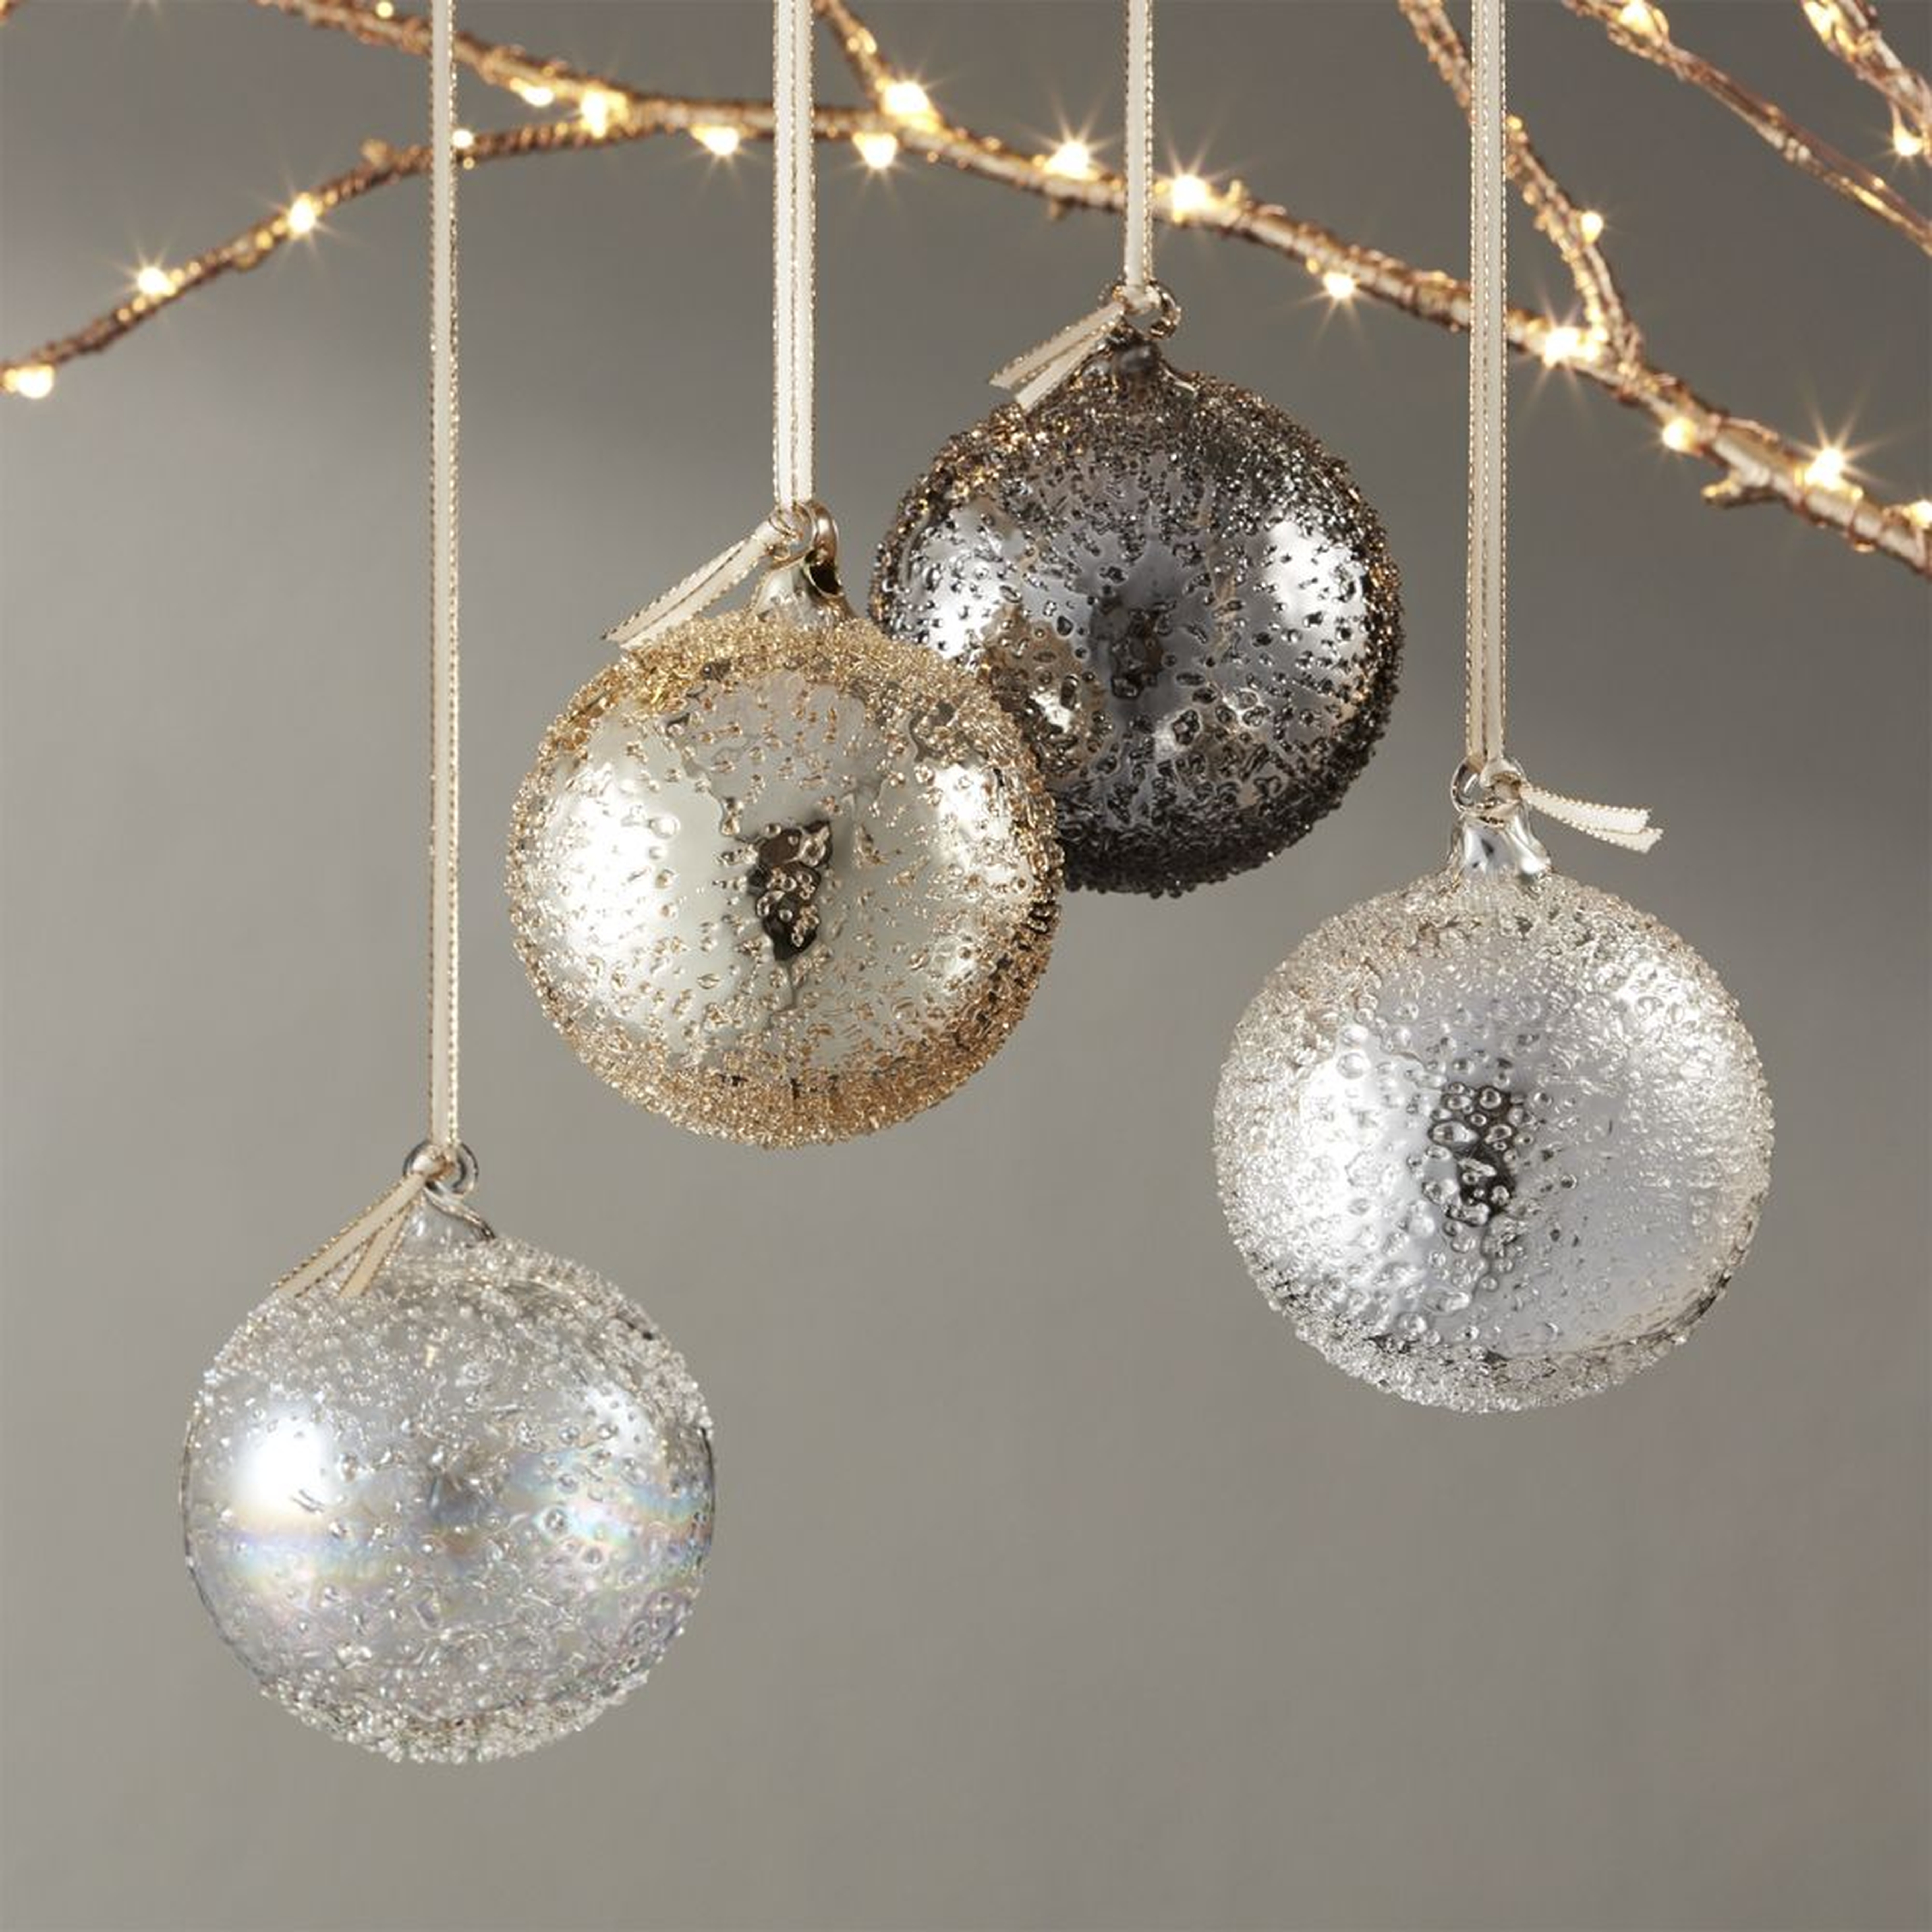 Metallic Glass Textured Ornaments Set of 4 - CB2